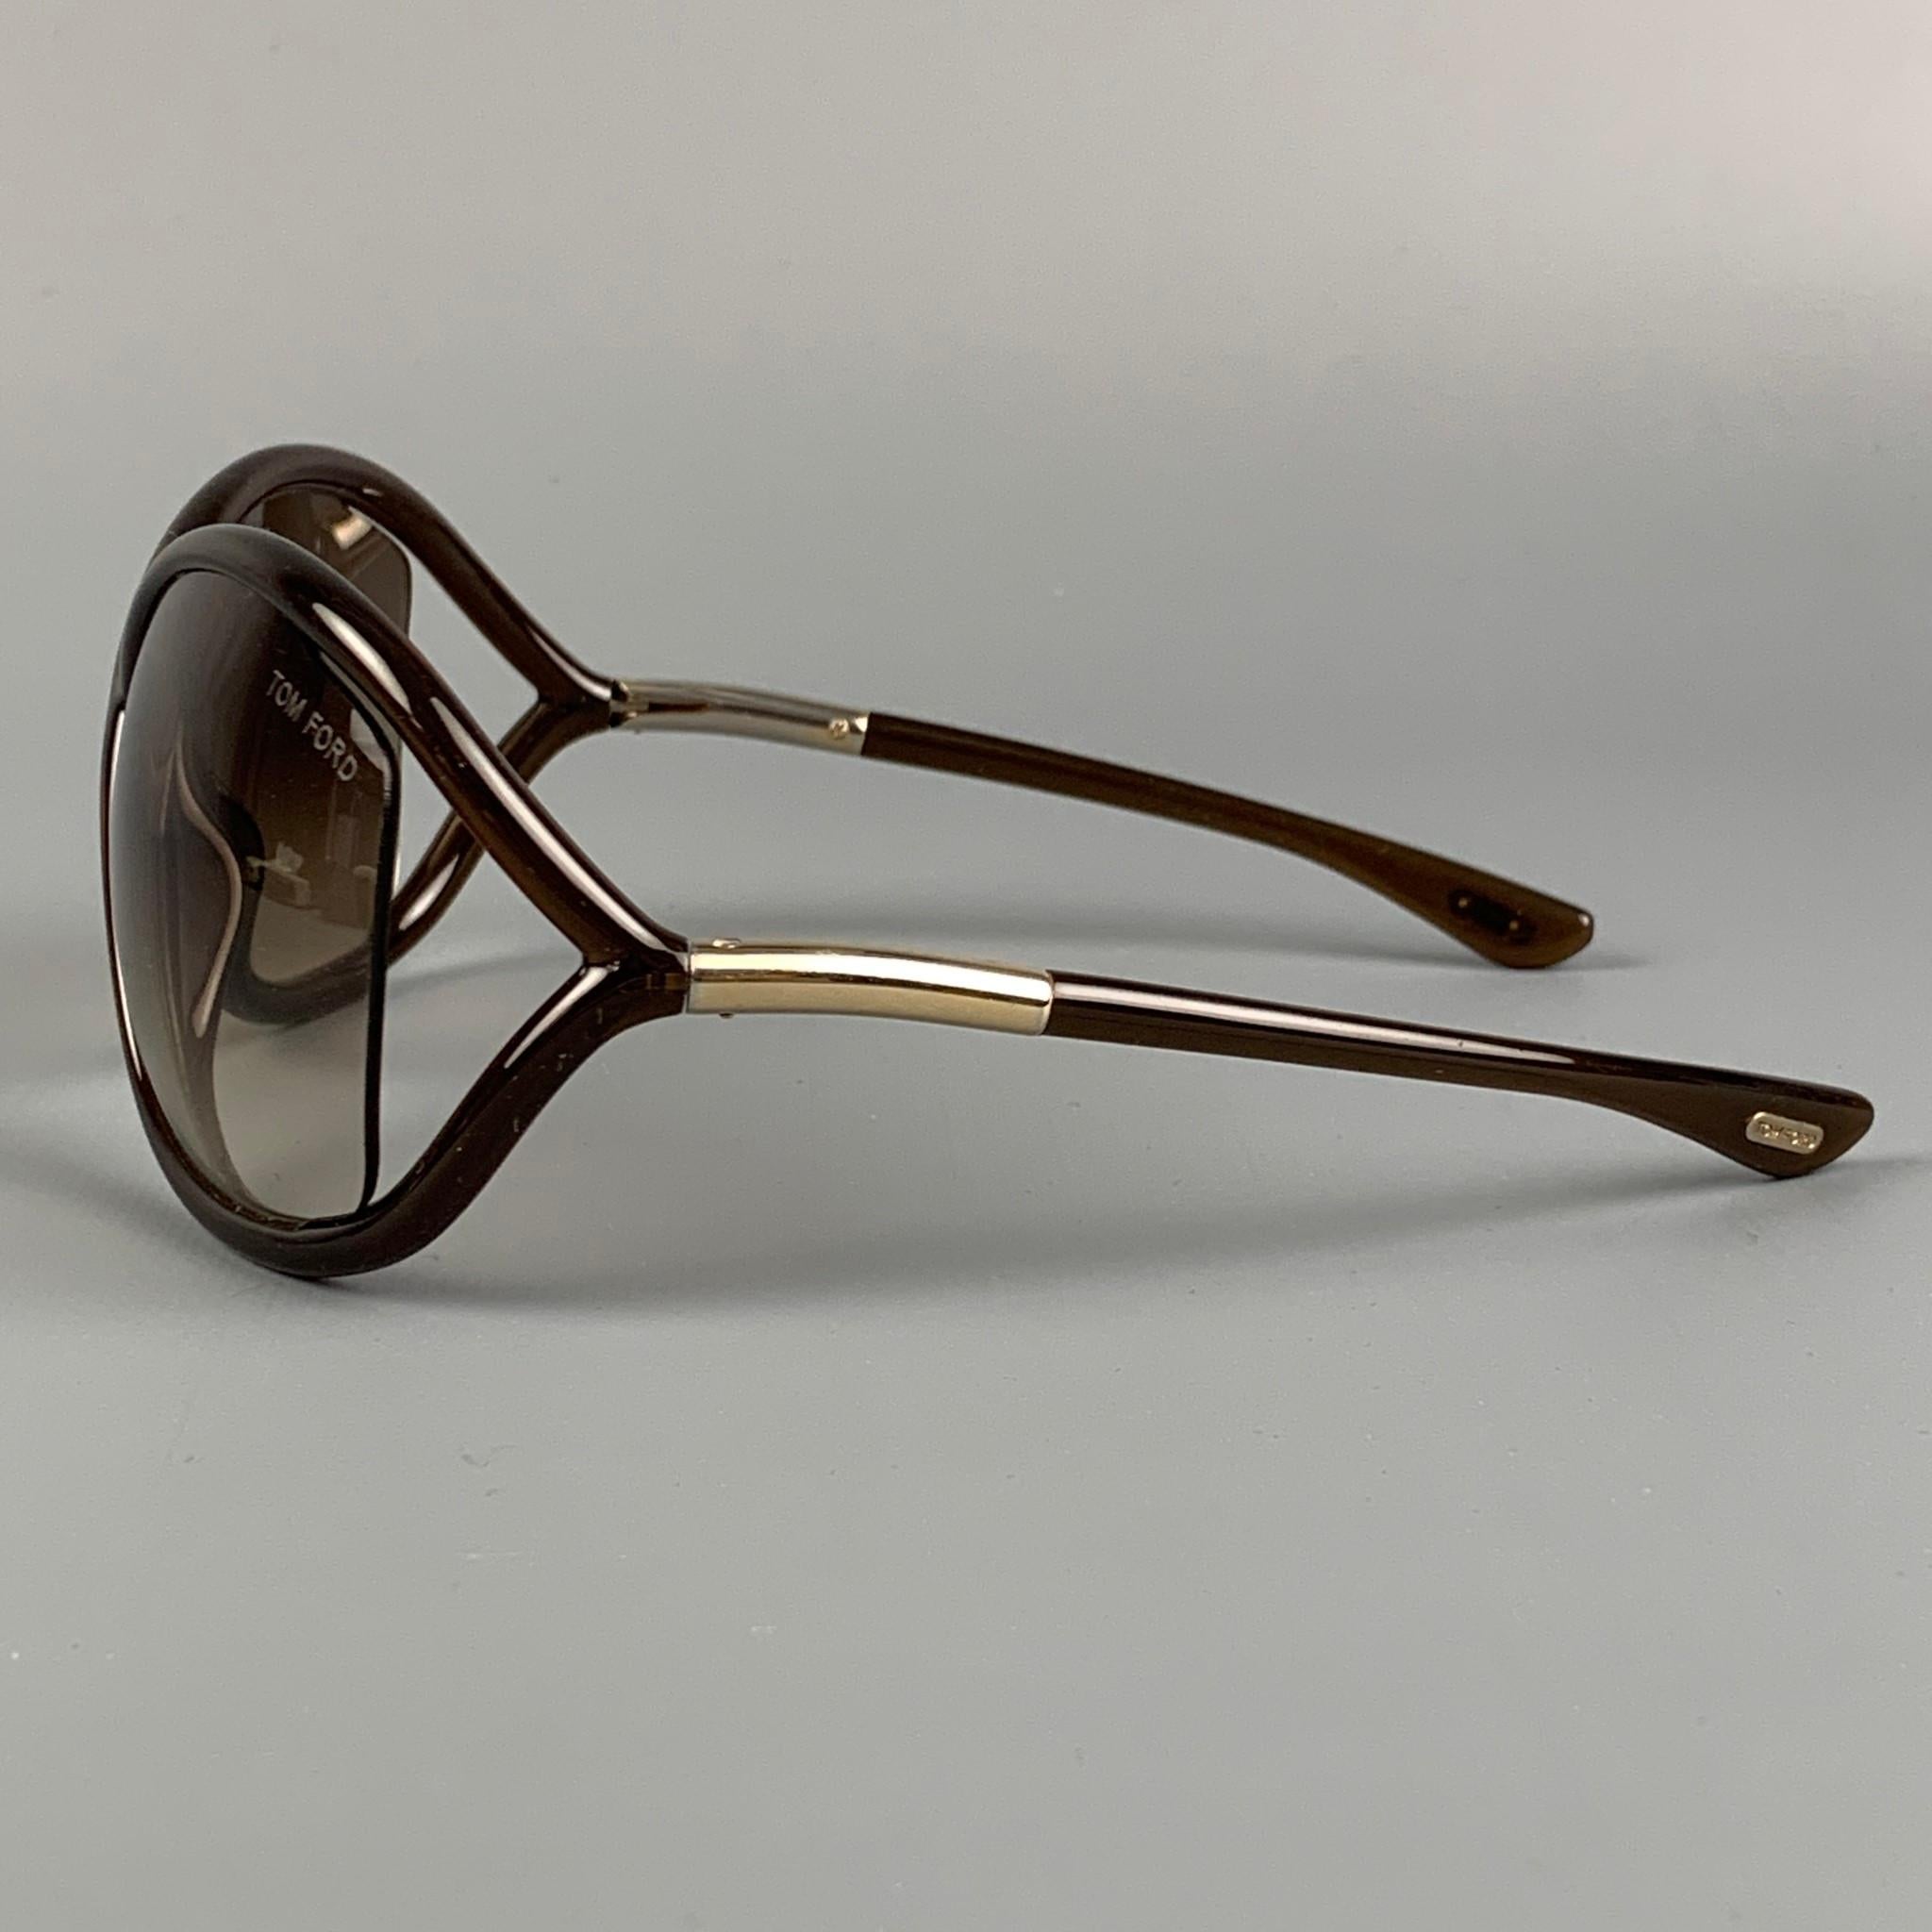 tom ford miranda look alike sunglasses